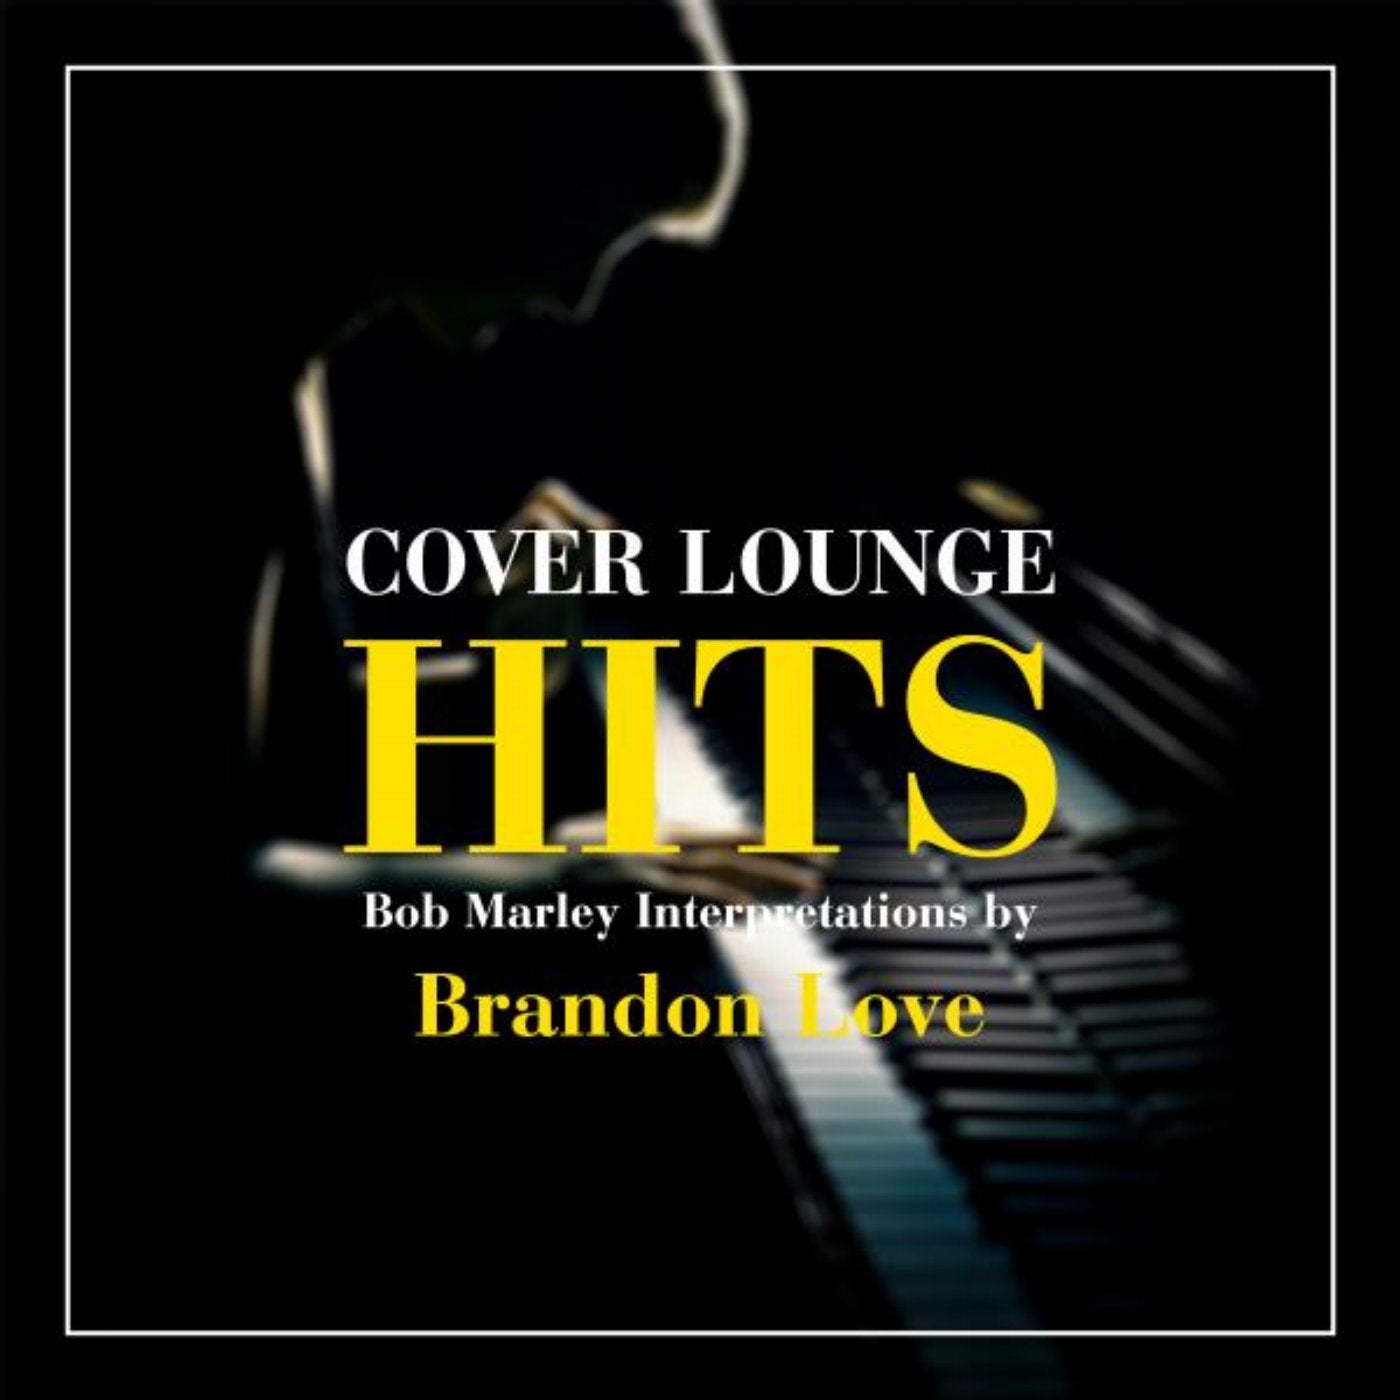 Cover Lounge Hits - Bob Marley Interpretations by Brandon Love